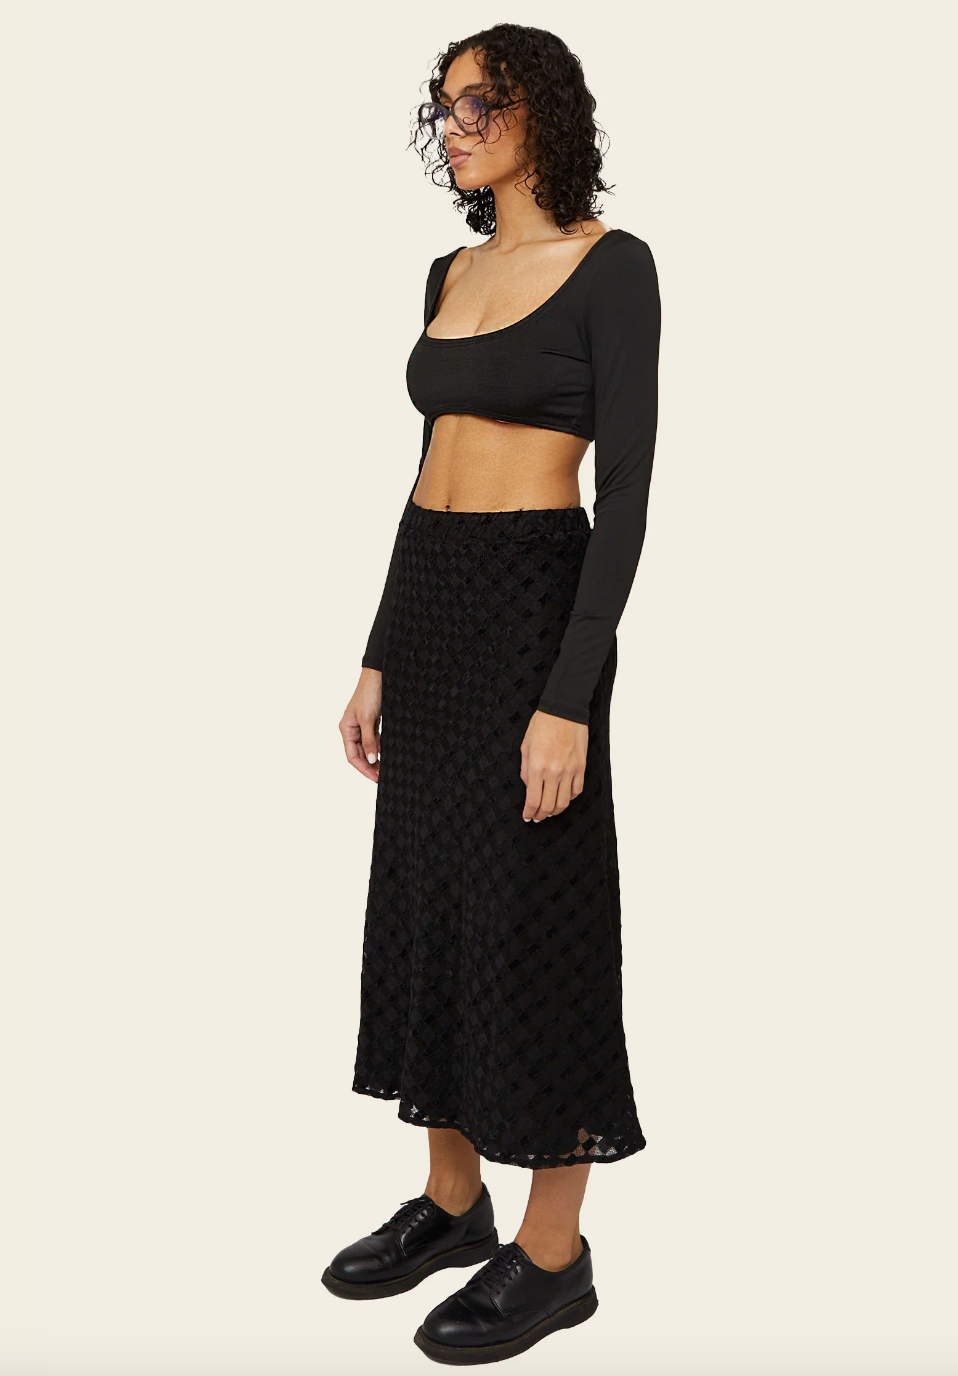 Product Image for Harmony Skirt, Black